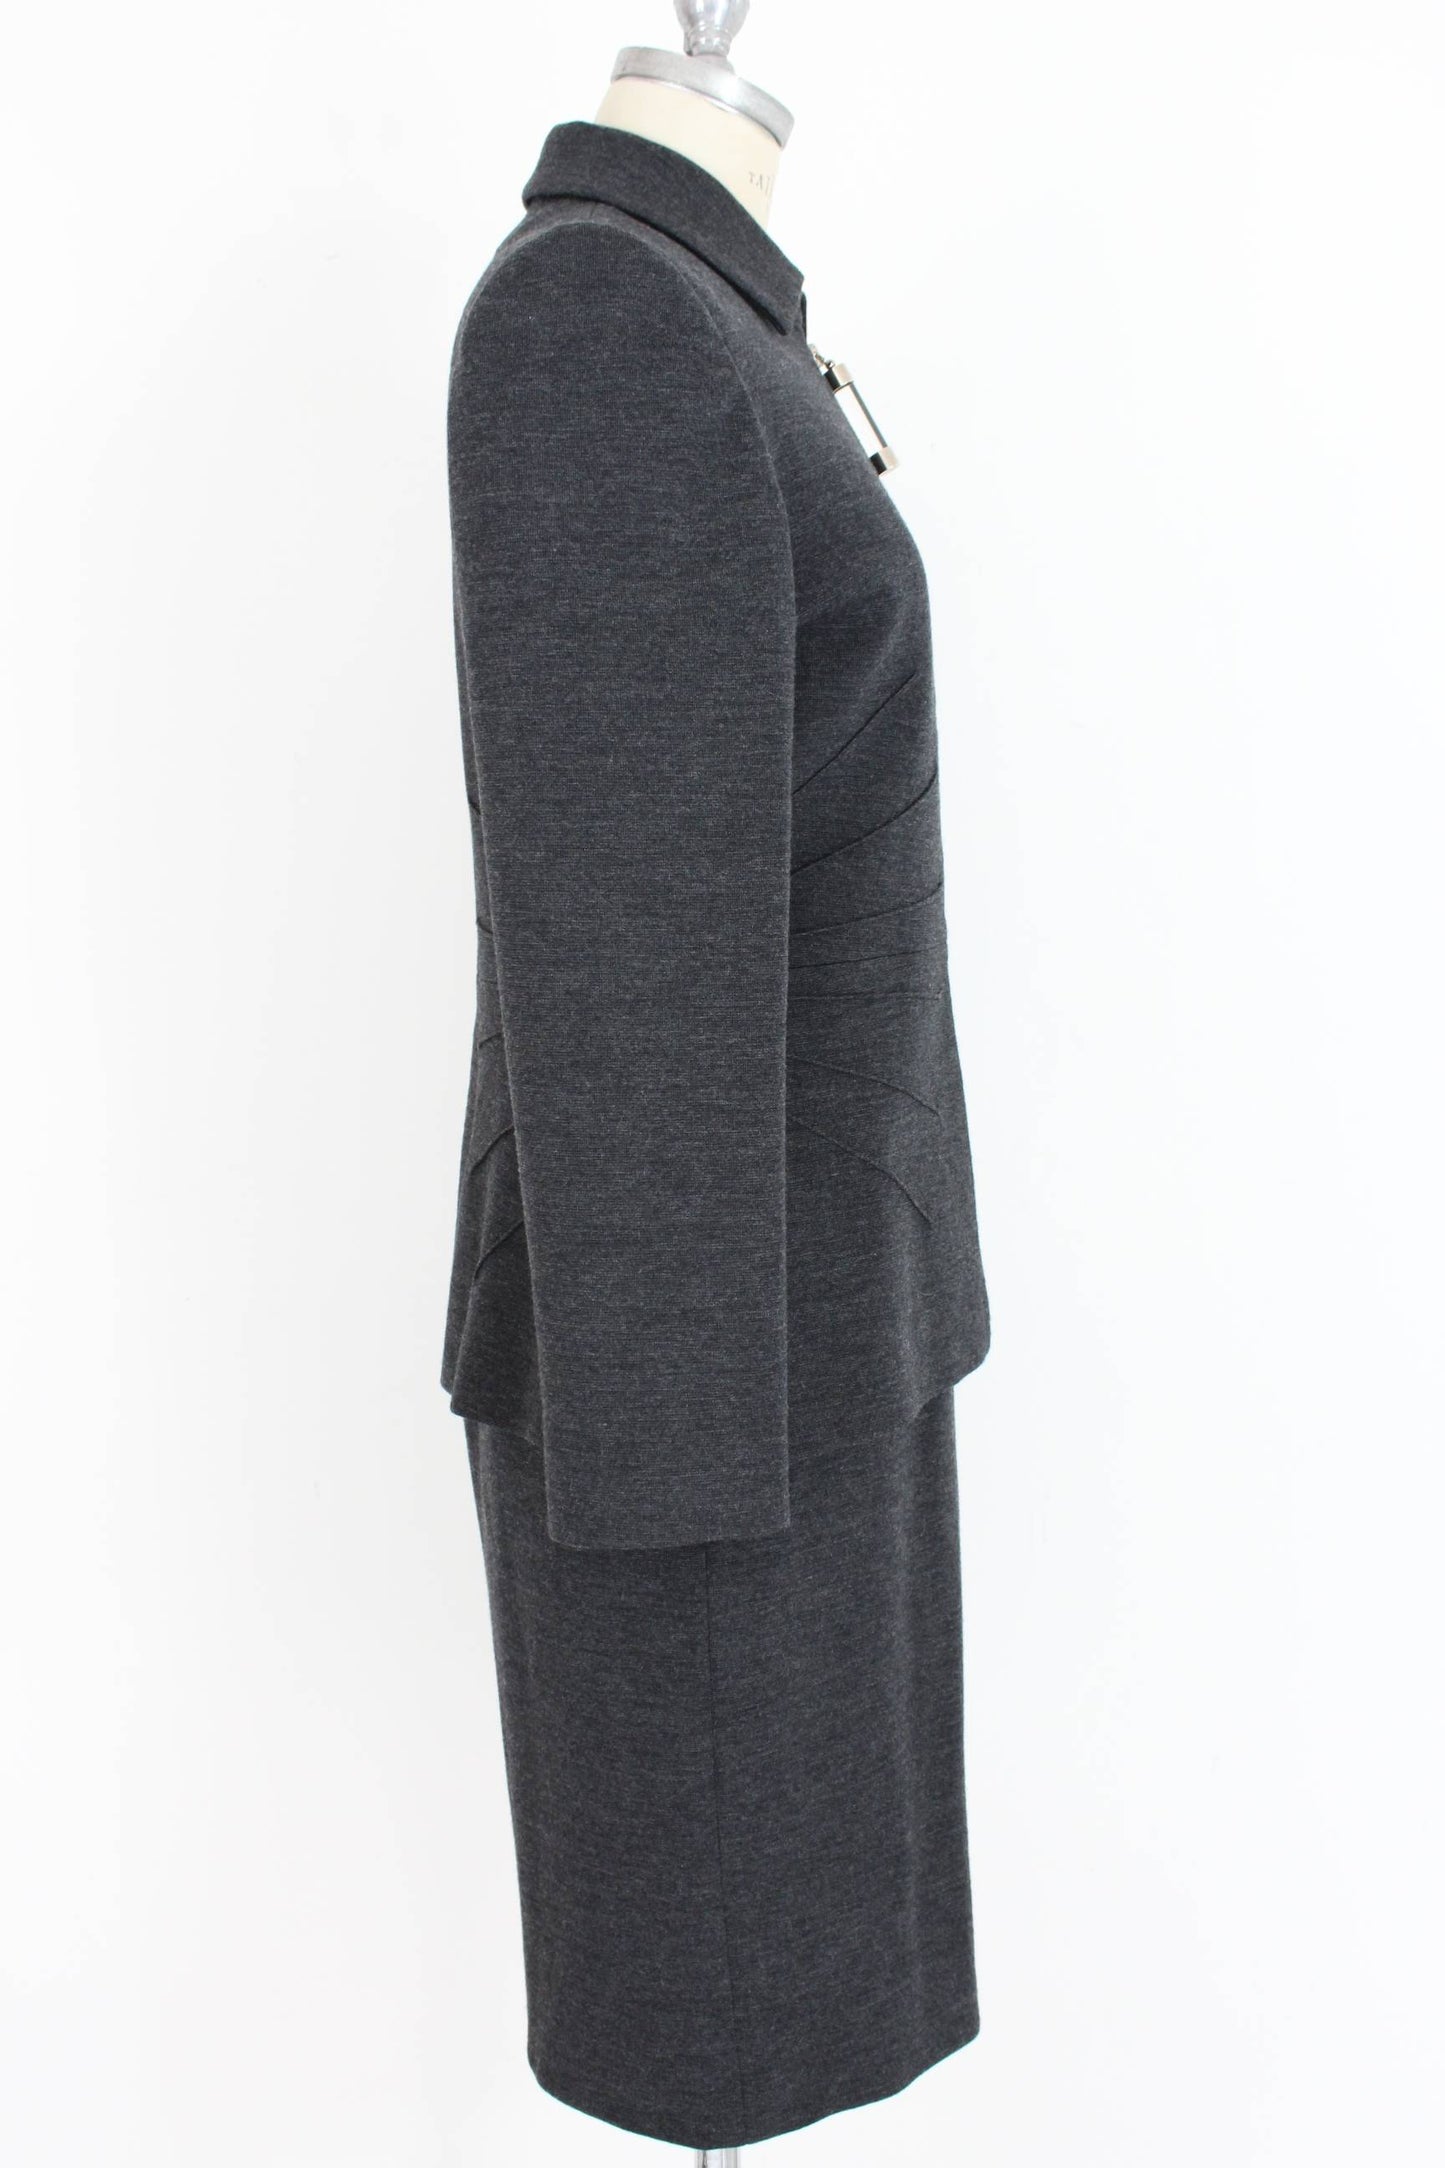 Gai Mattiolo Vintage Gray Wool Casual Suit Skirt